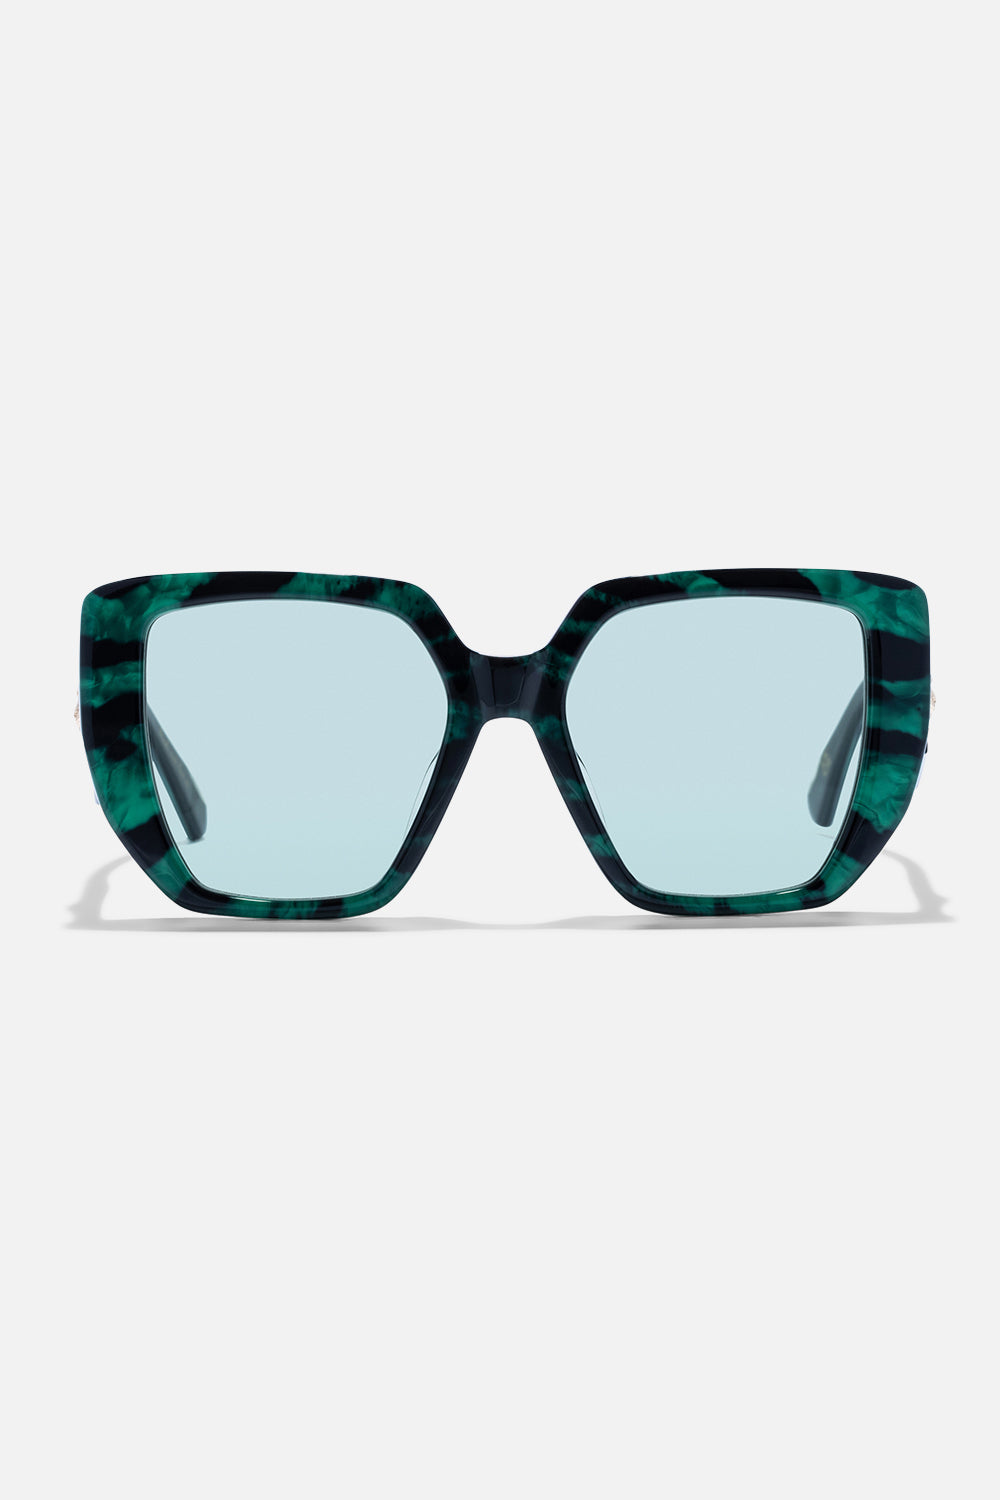 CAMILLA green animal print designer sunglasses 